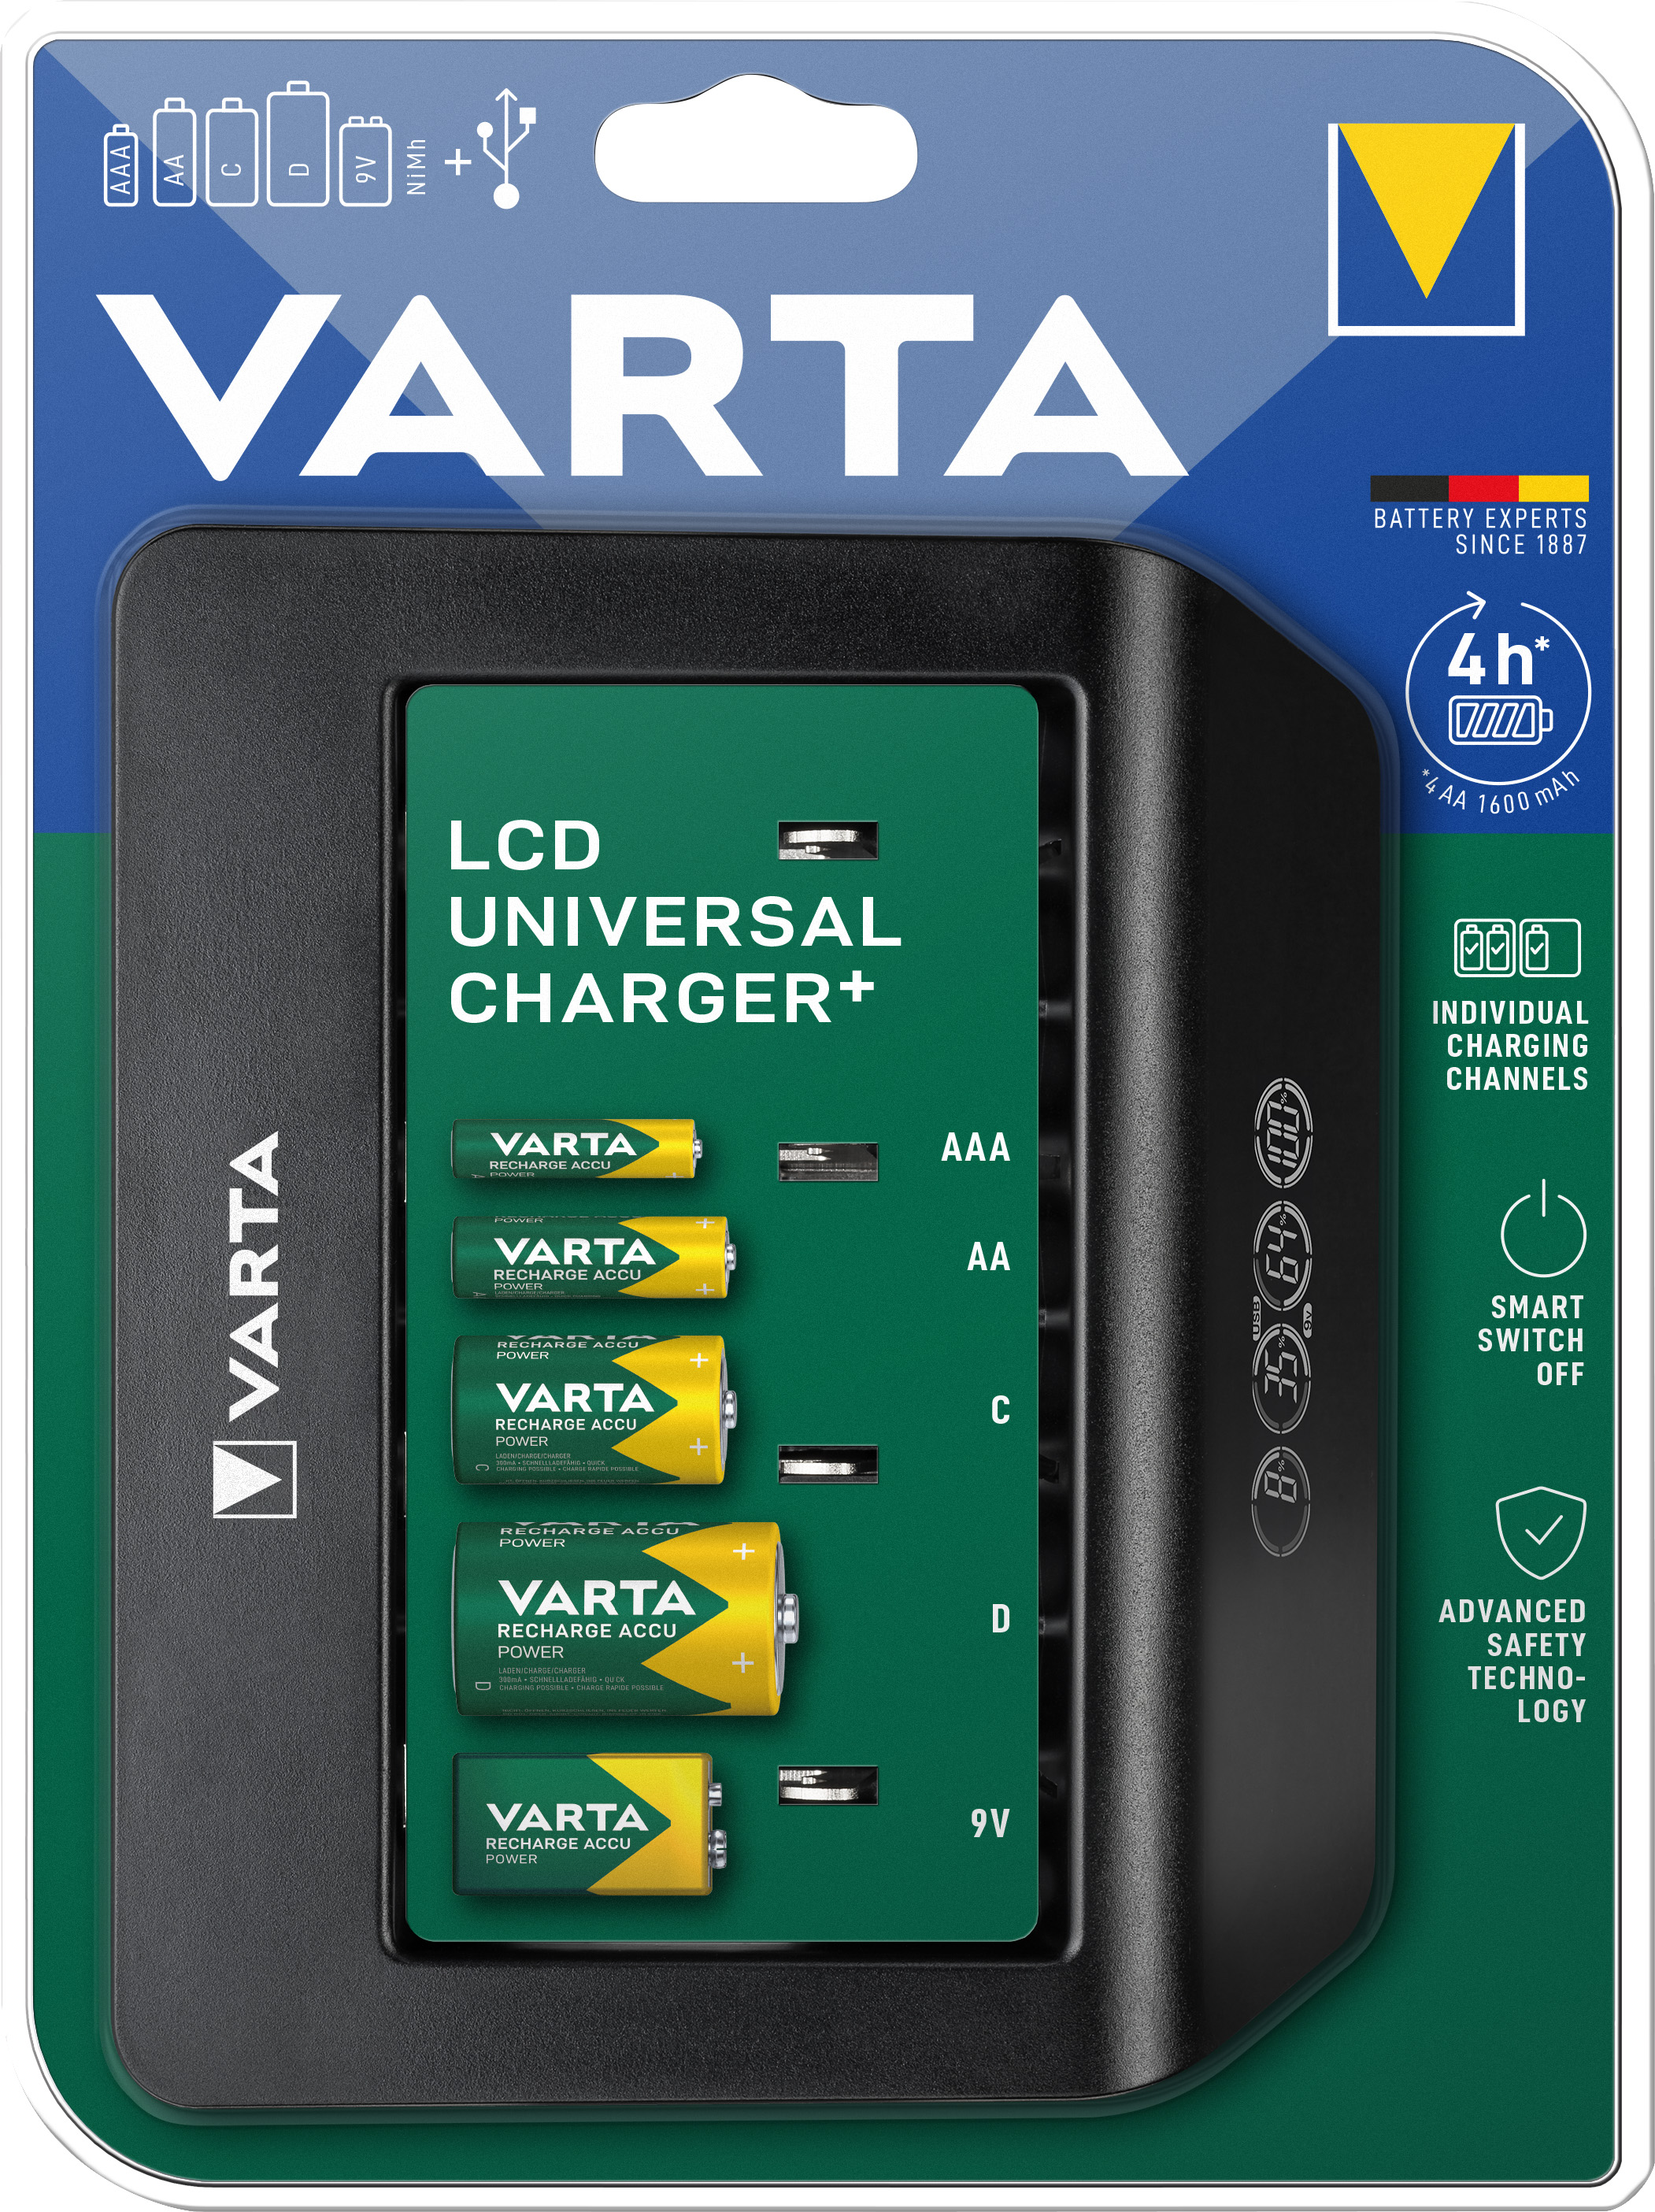 VARTA Ladegerät LCD Universal verschiedene Ladegerät Charger+ Universal, Akku Grau für Größen NiMH